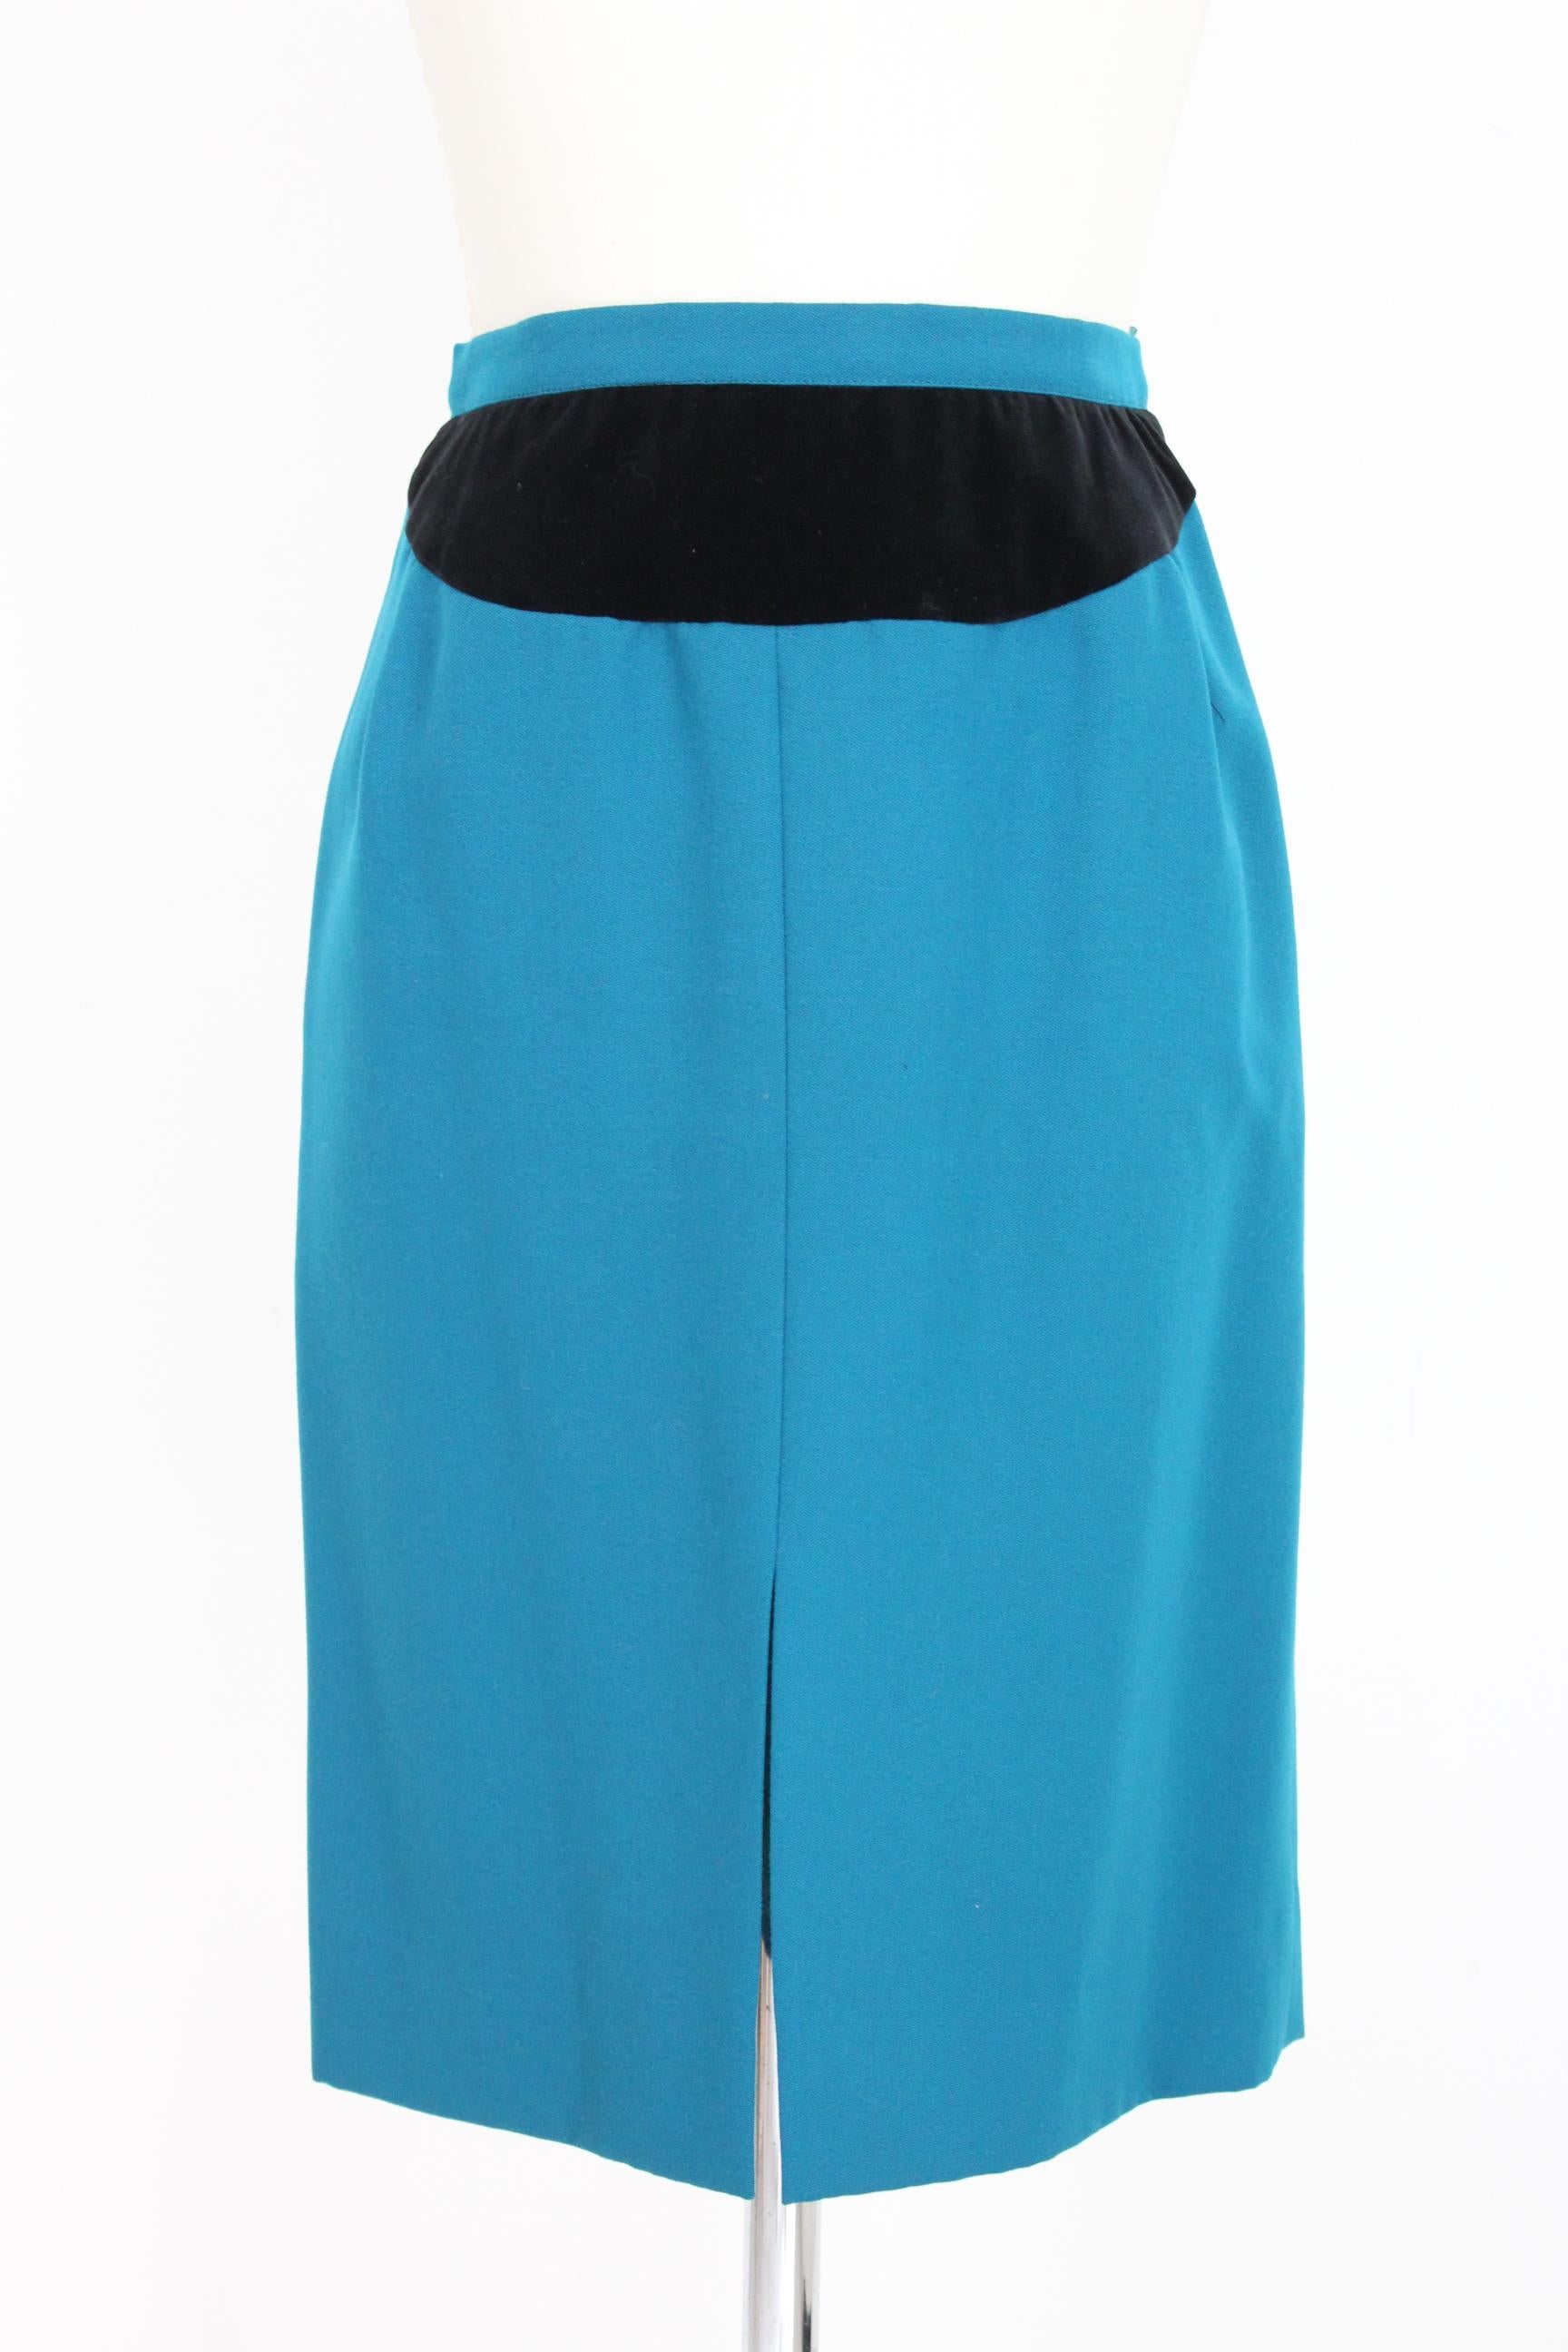 Valentino Boutique Blue Black Wool Velvet Swarosky Evening Skirt Suit 2